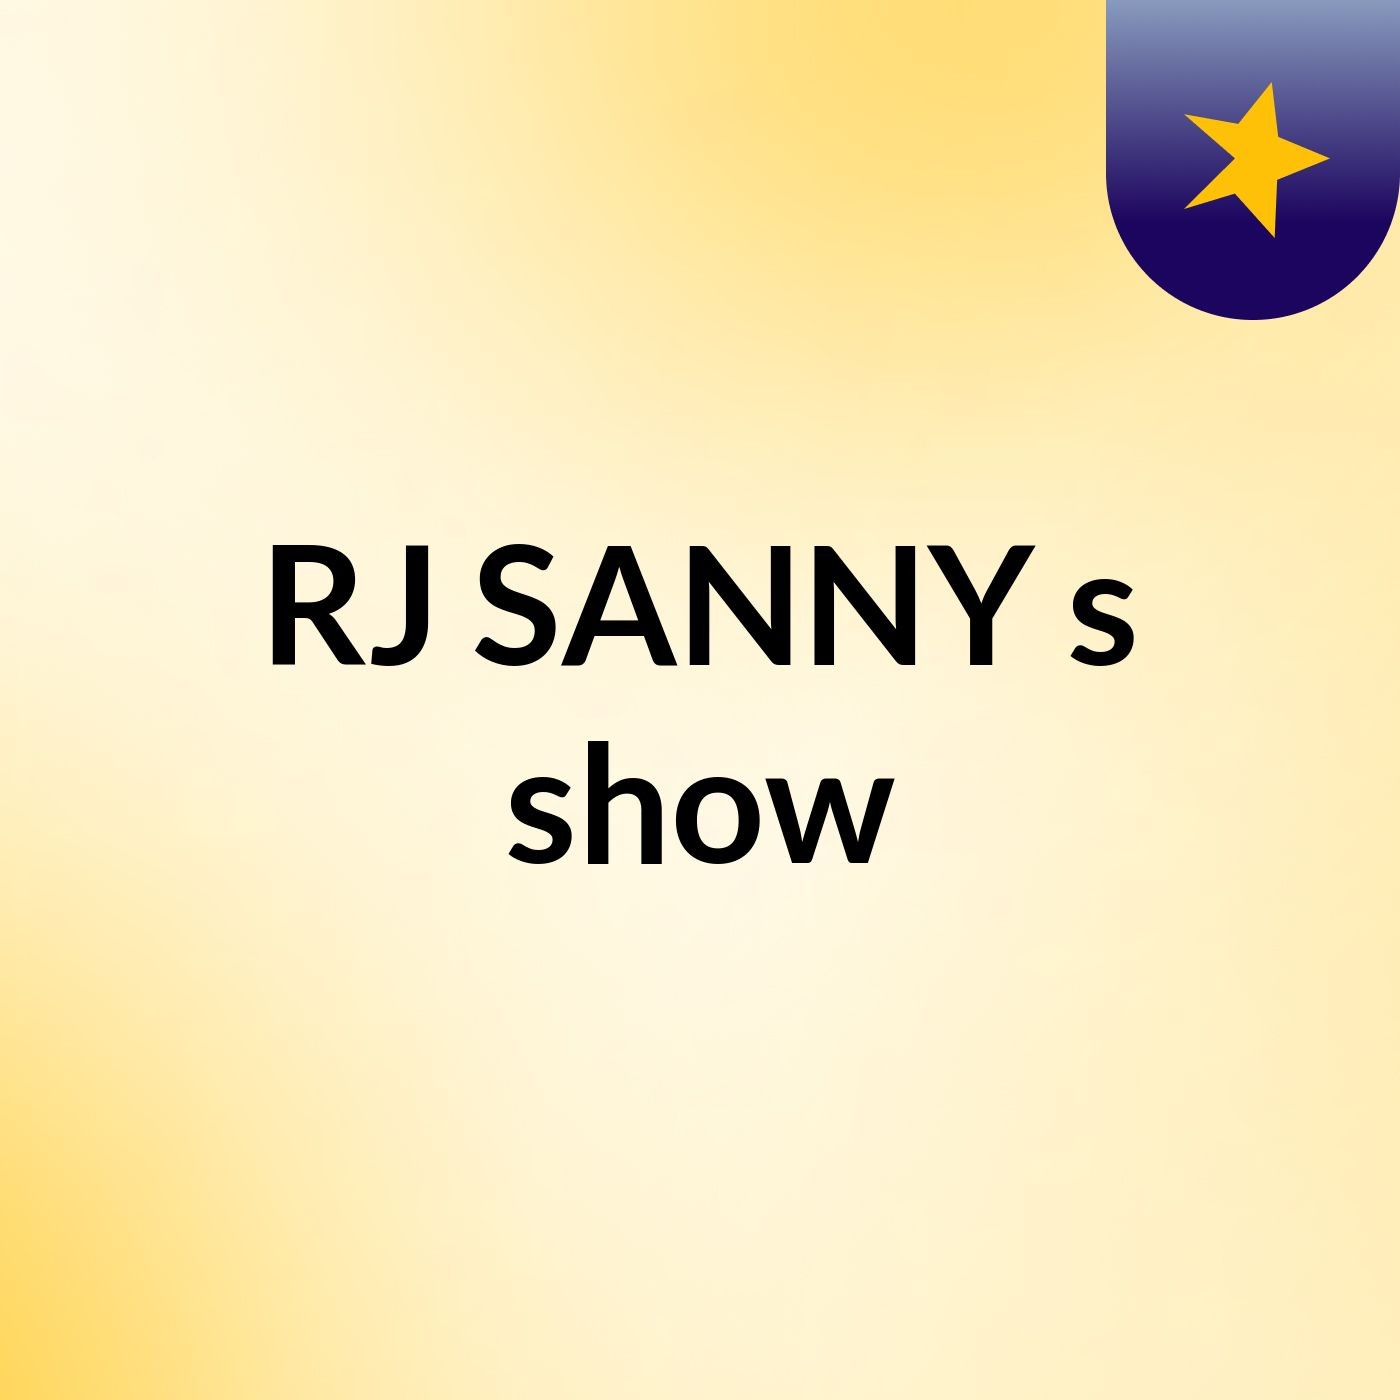 RJ SANNY's show